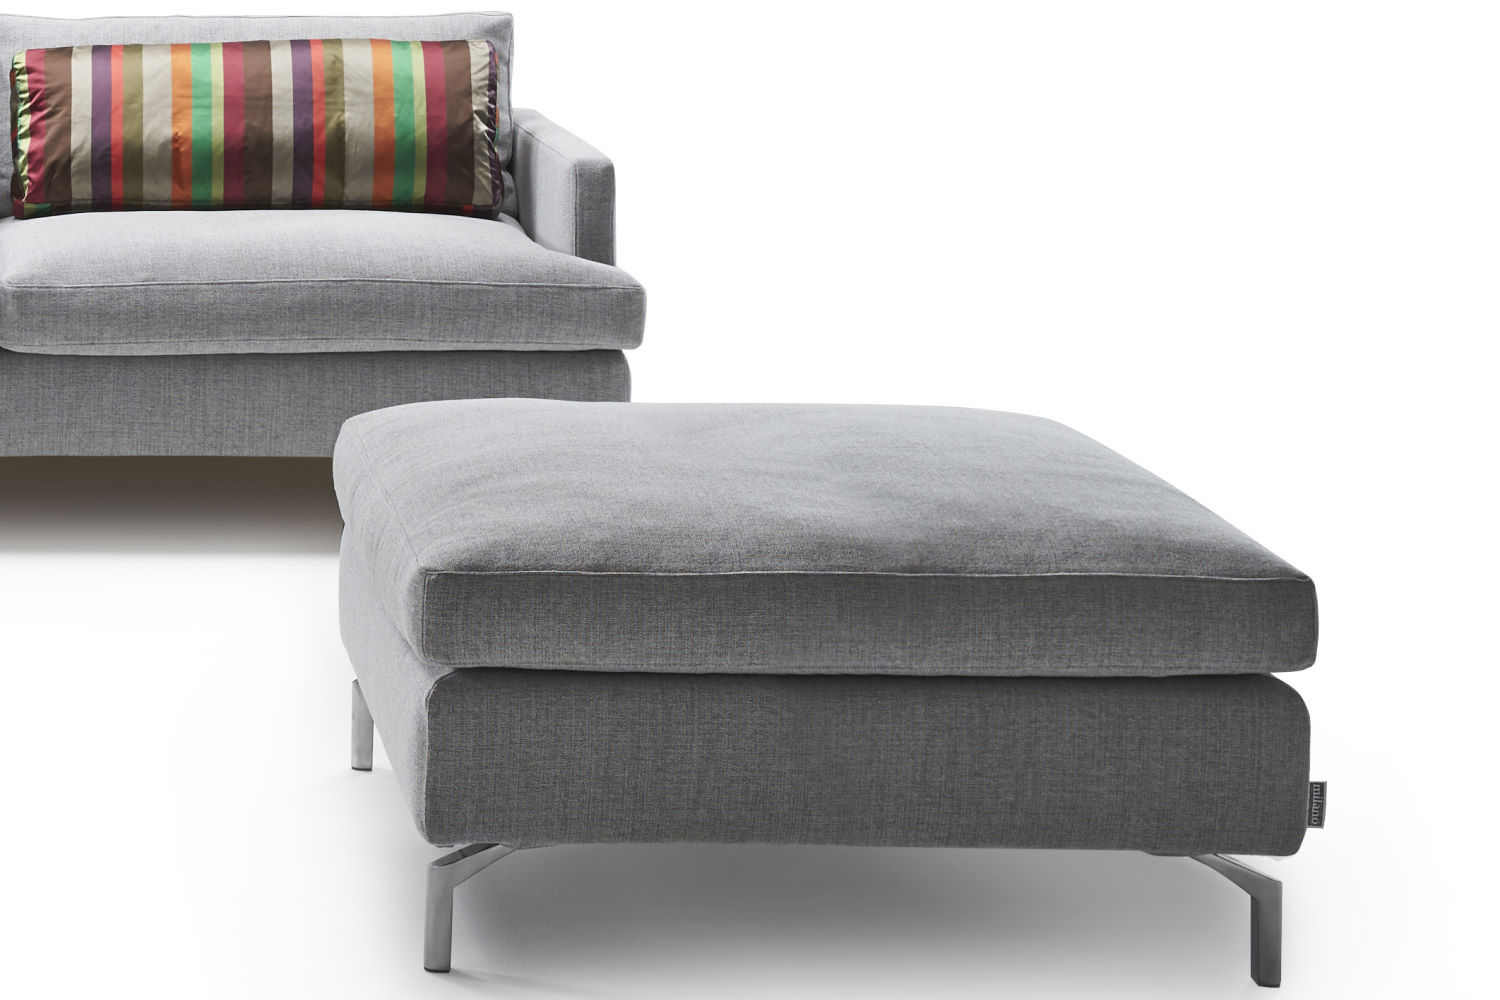 Large square or rectangular sofa footstool